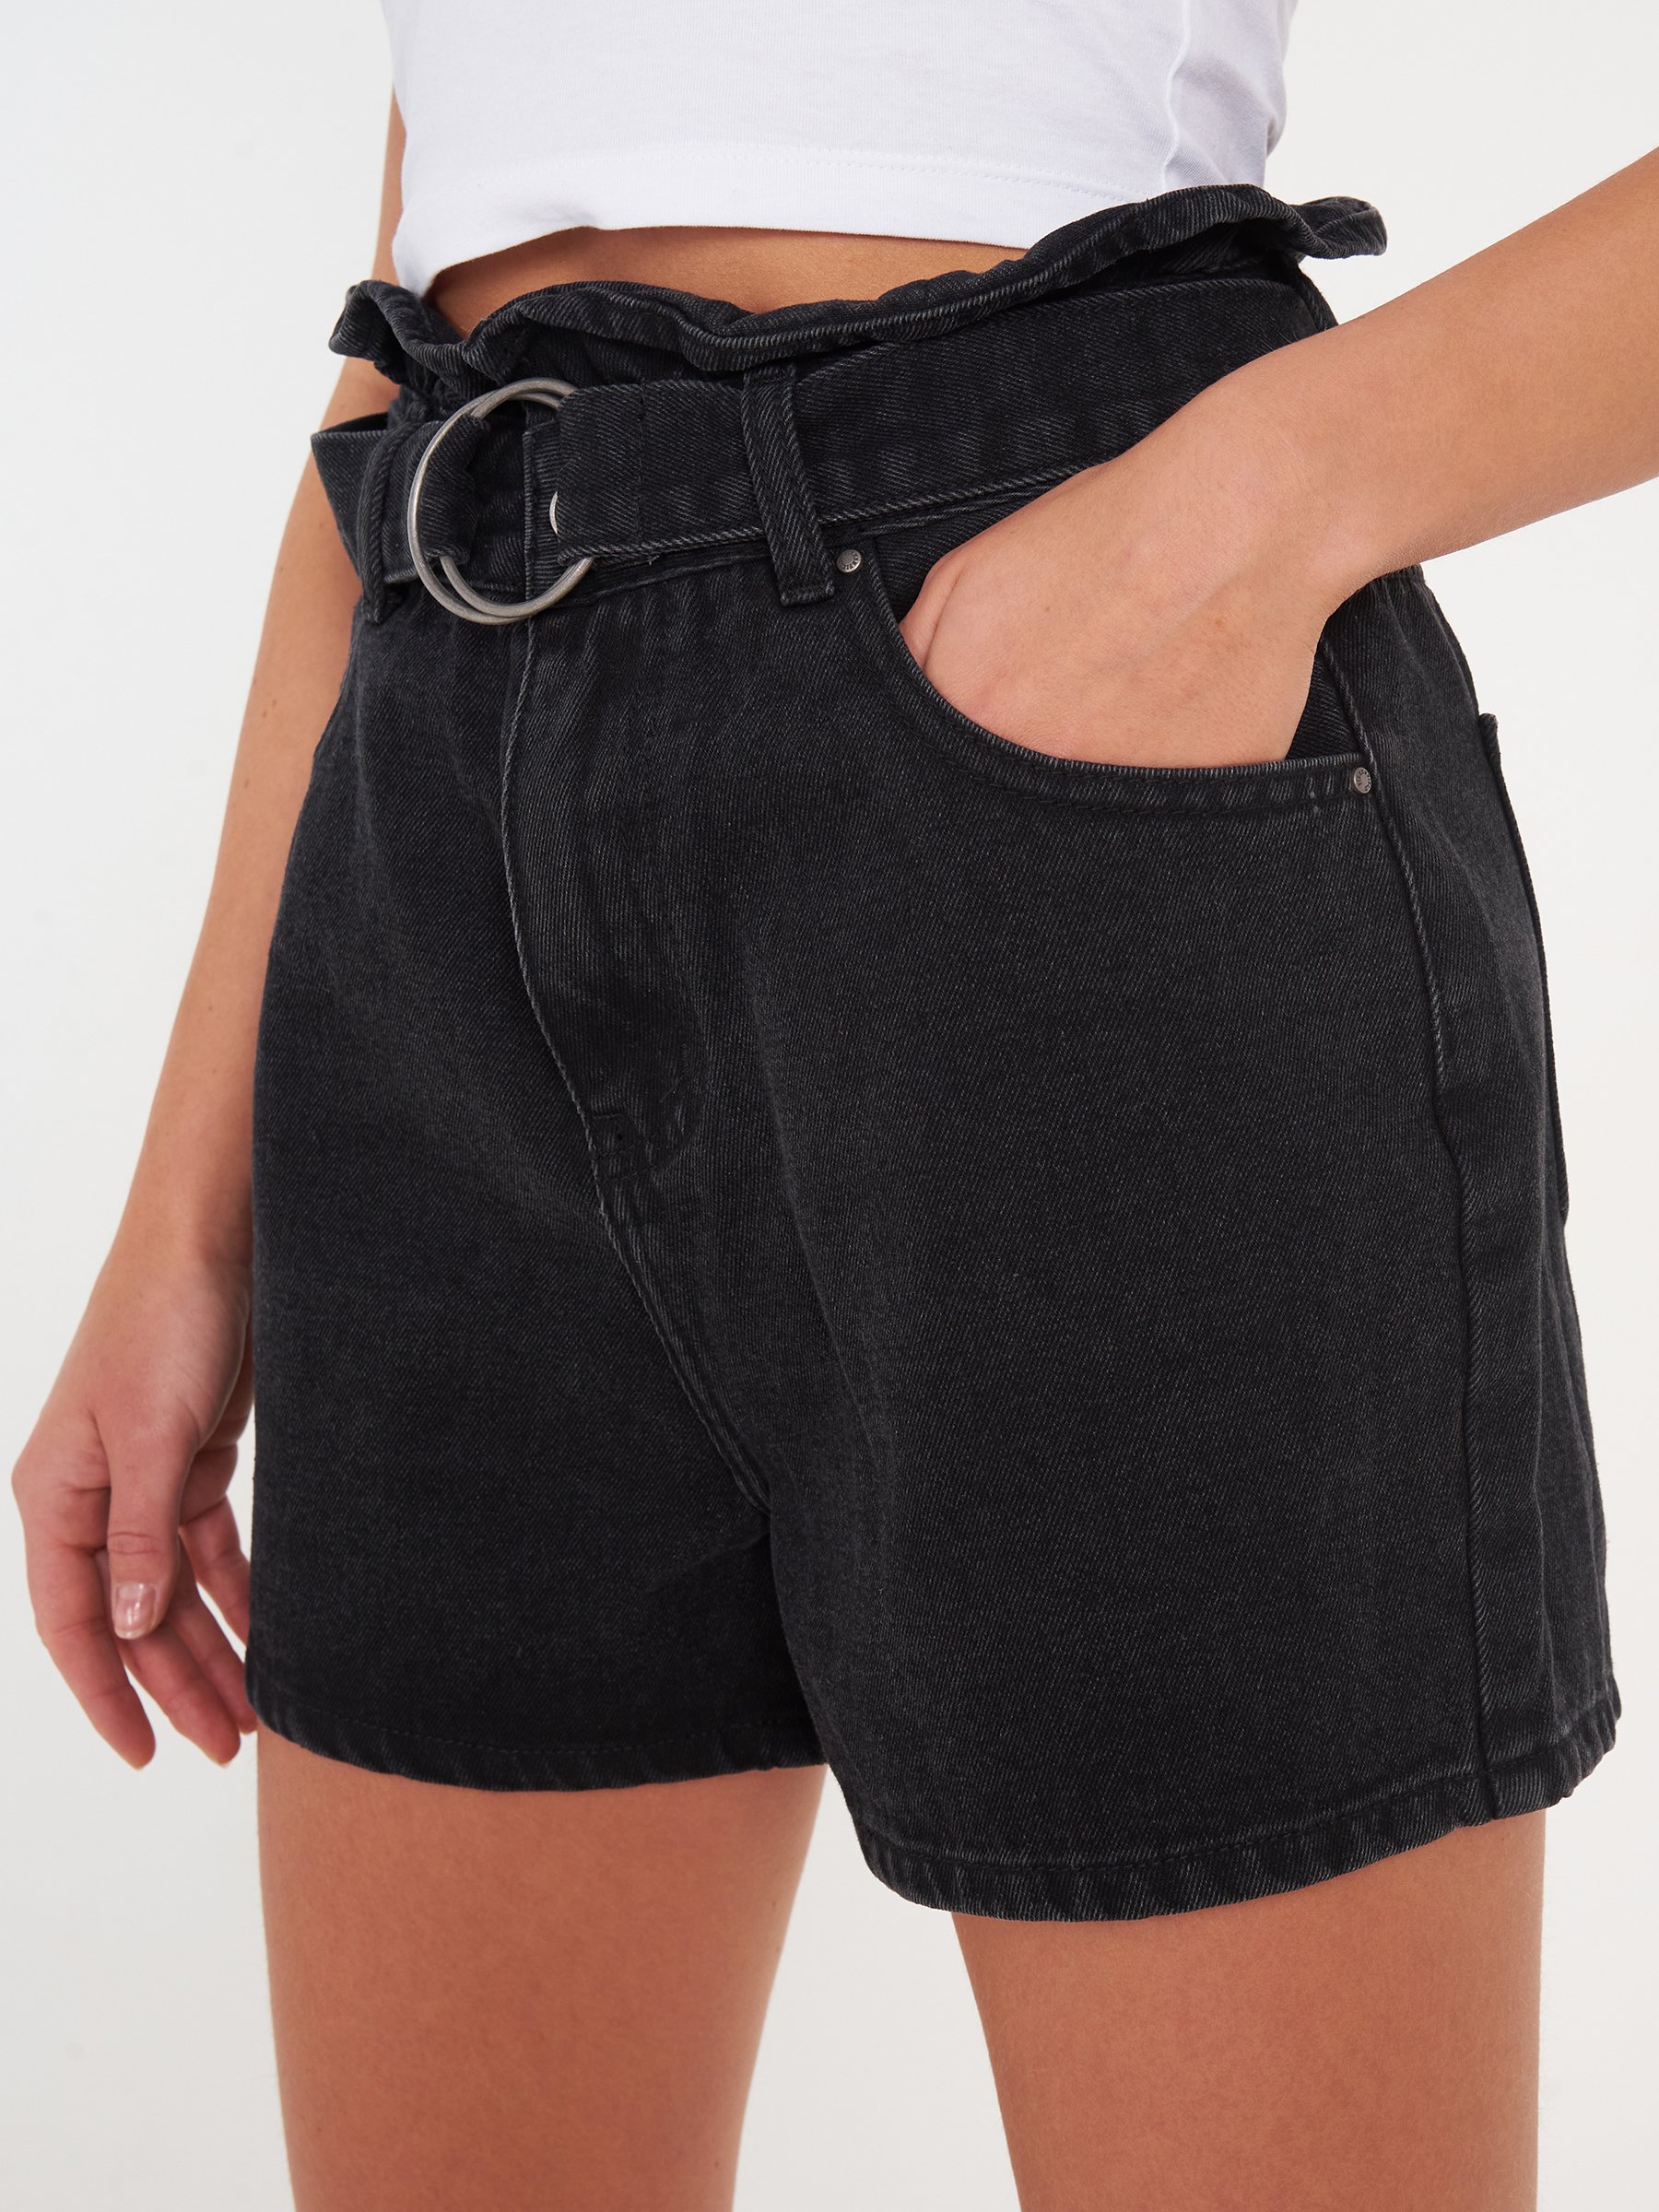 discount 98% Stradivarius shorts jeans WOMEN FASHION Jeans NO STYLE Black 34                  EU 